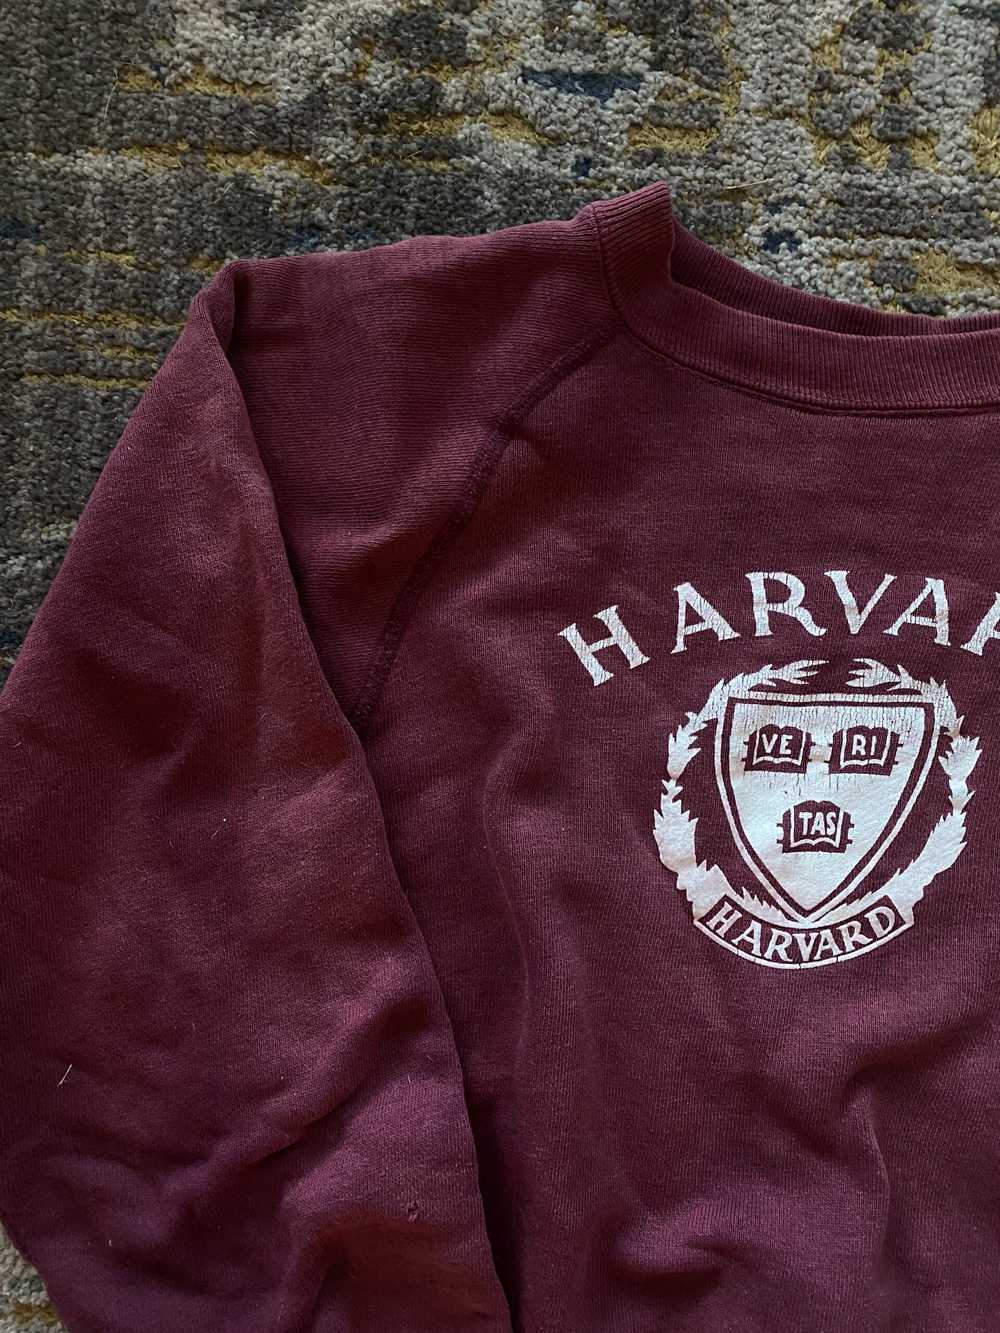 1950’s/60’s maroon Harvard sweatshirt - image 2